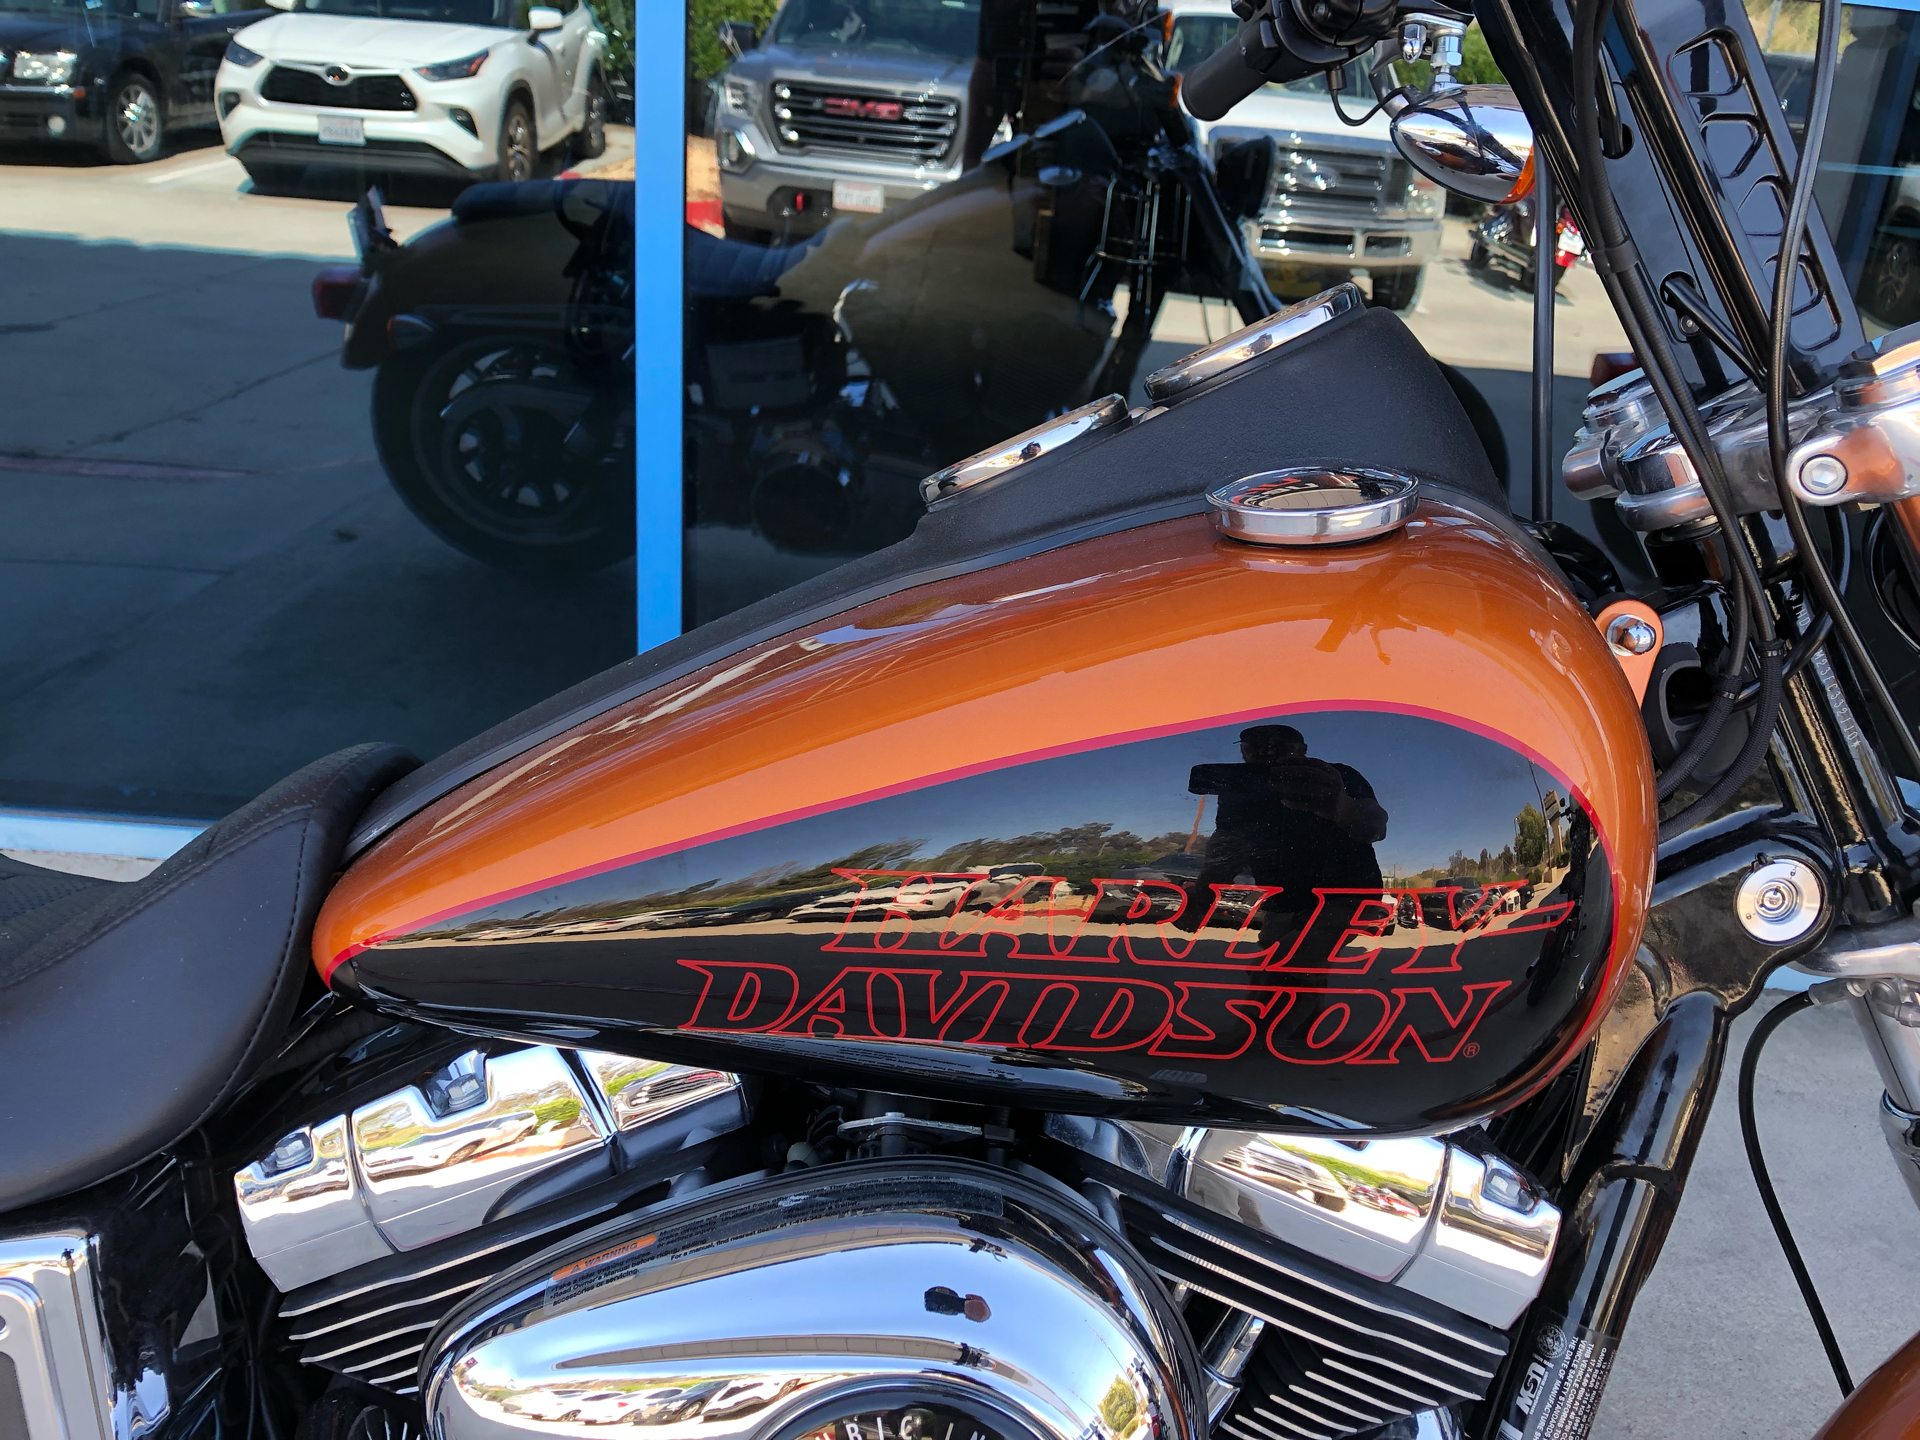 2014 Harley-Davidson Low Rider® in Temecula, California - Photo 4